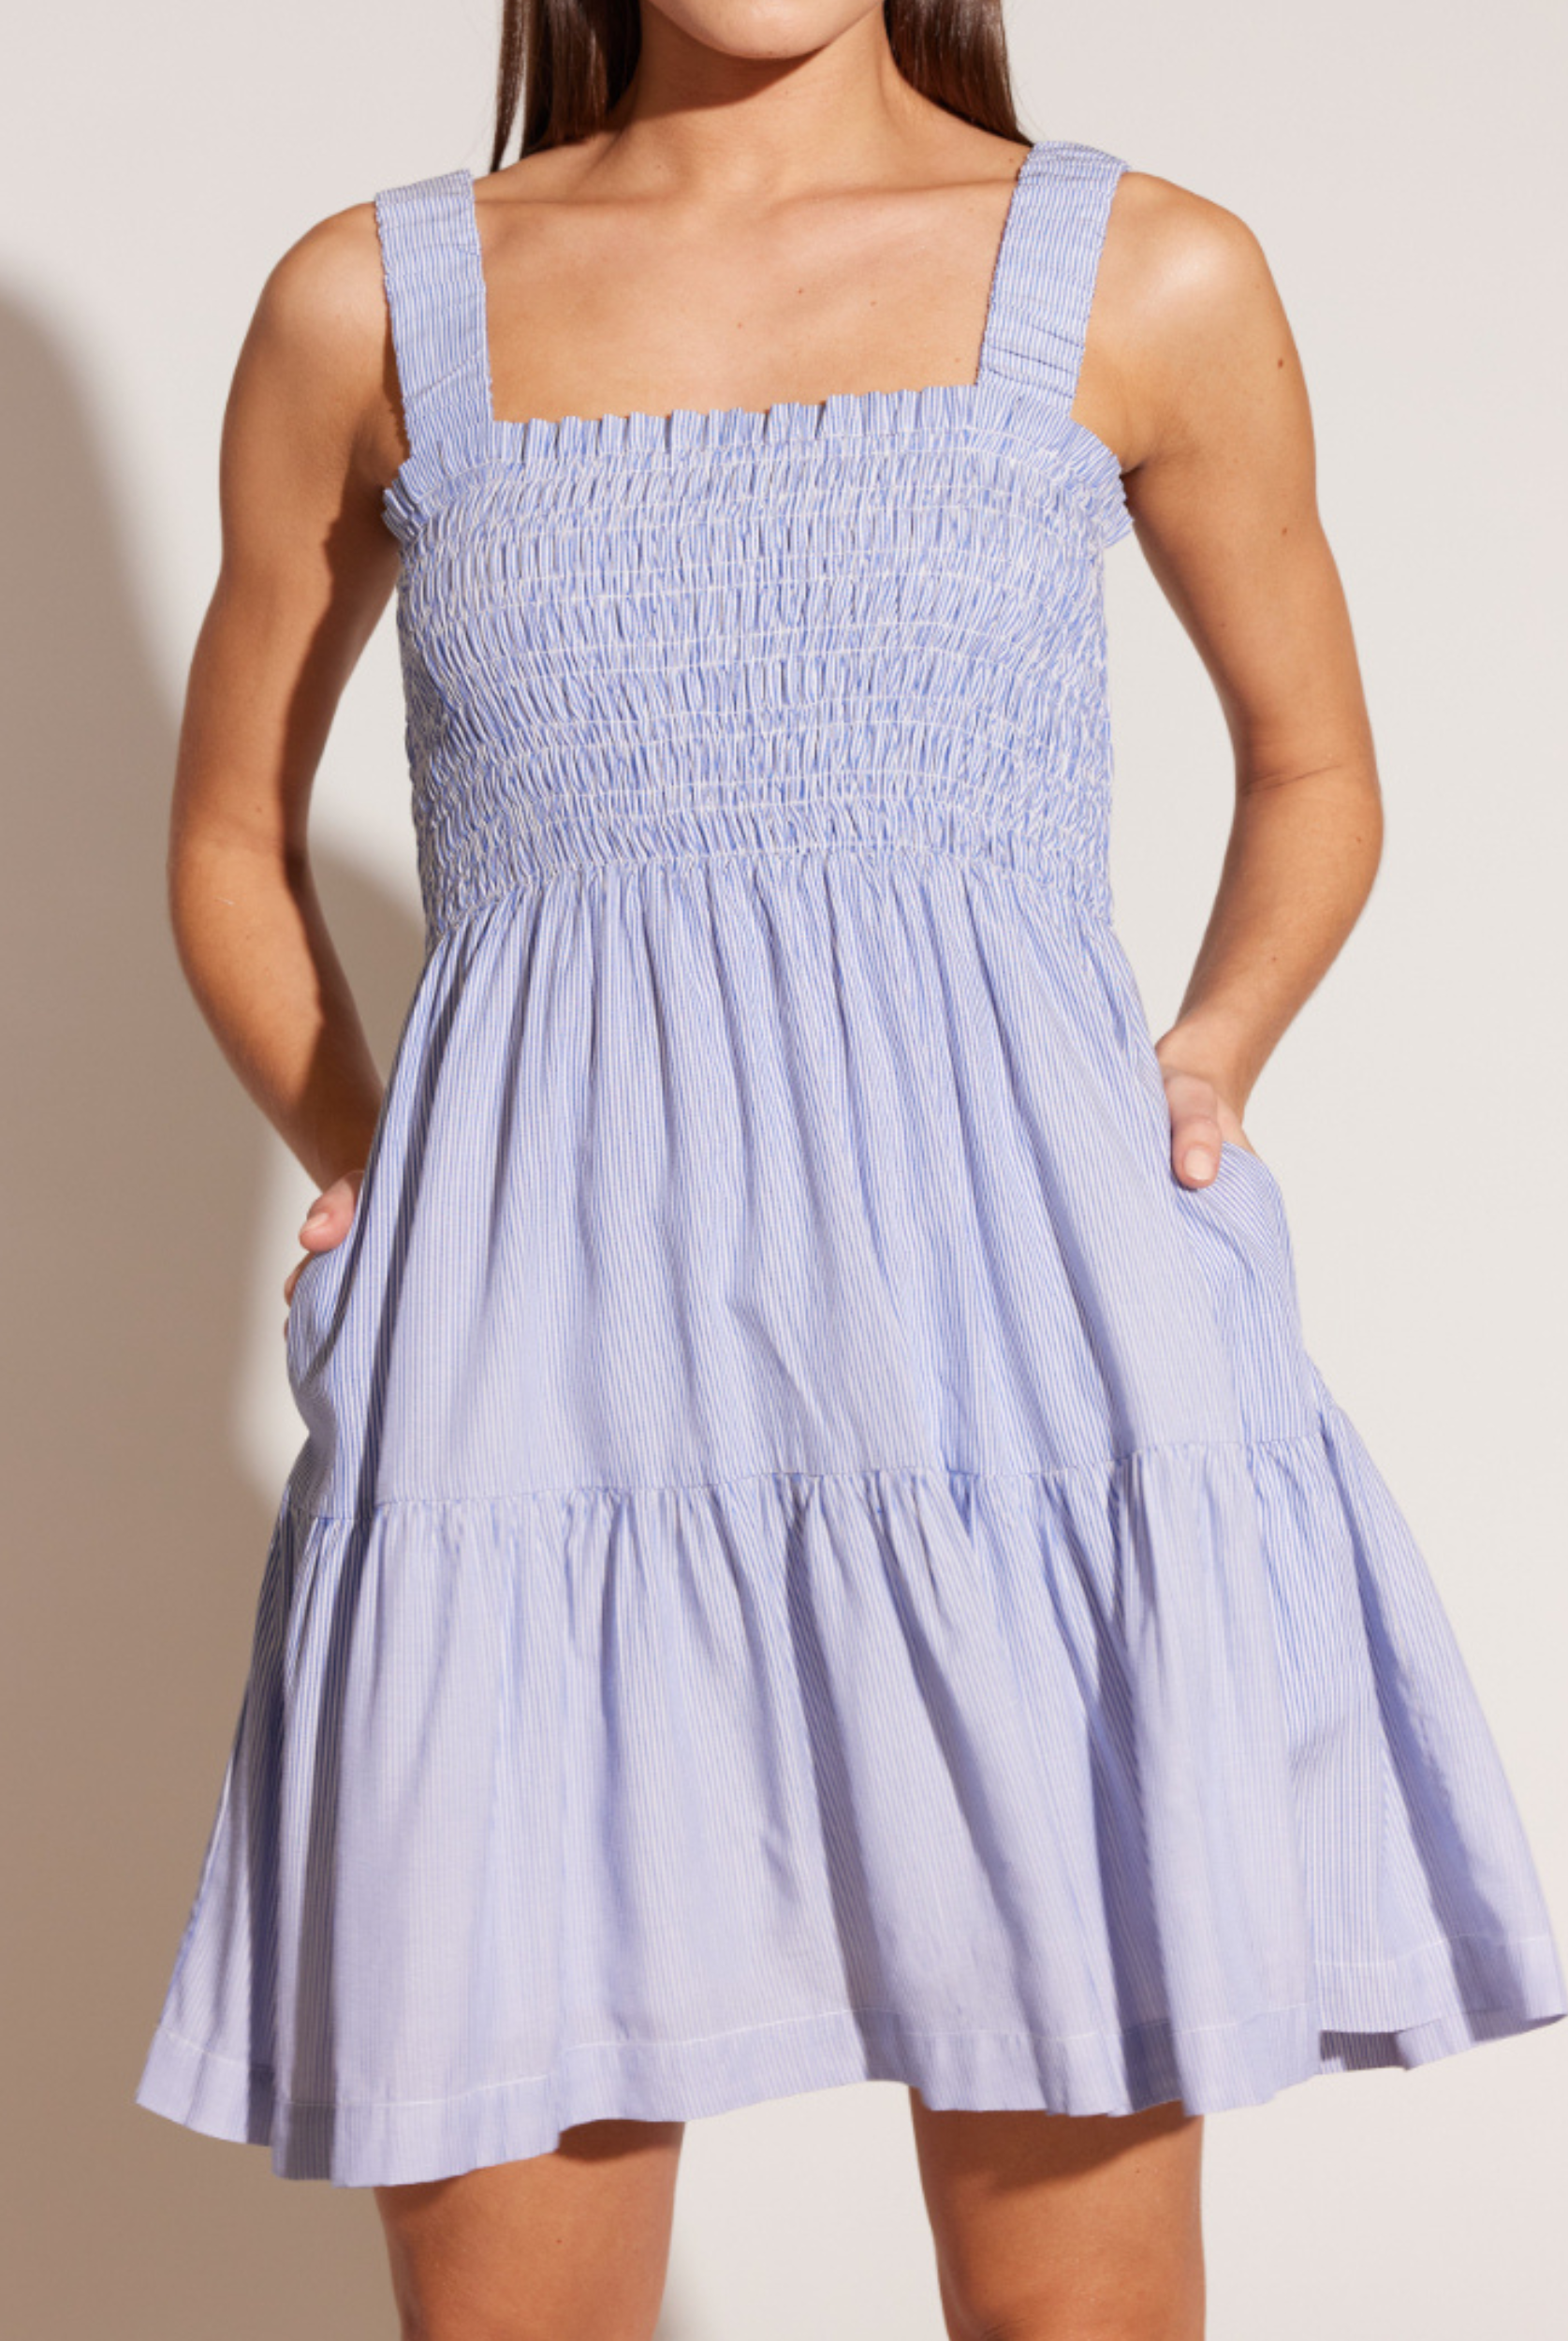 Model wearing the stripey Amara Shirred mini dress